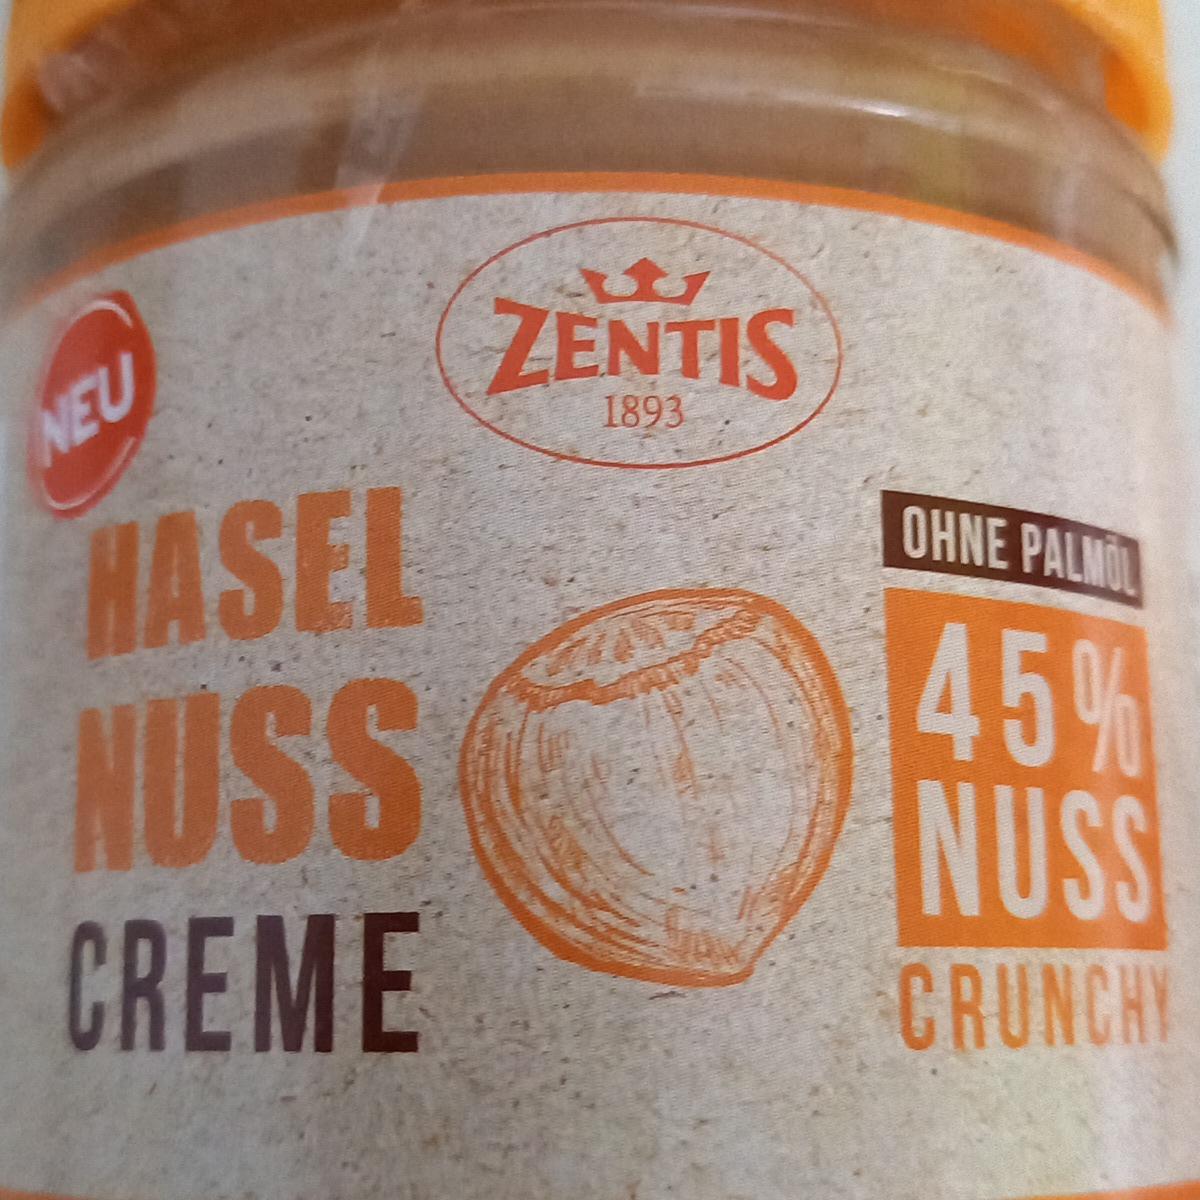 Fotografie - Hasel Nuss Creme 45% Nuss Crunchy Zentis